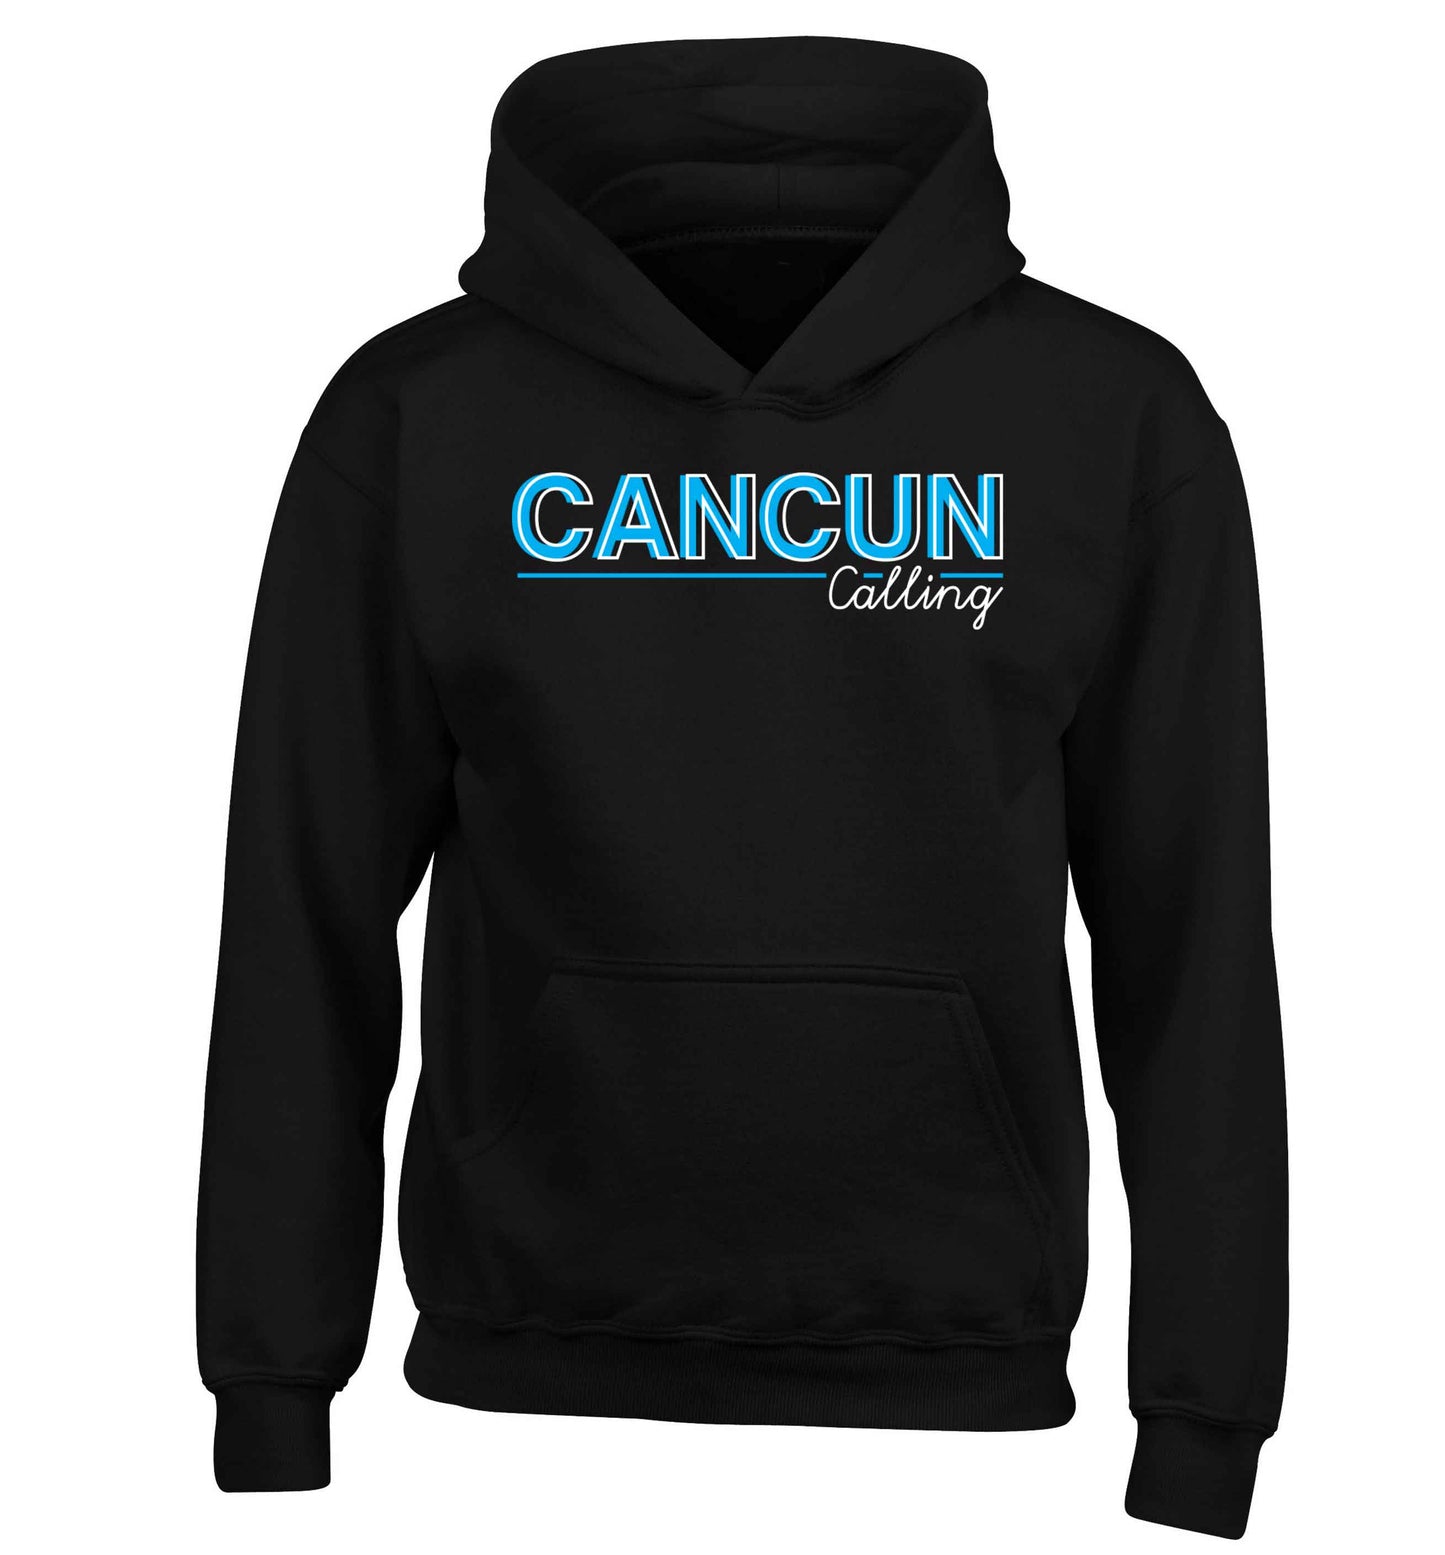 Cancun calling children's black hoodie 12-13 Years